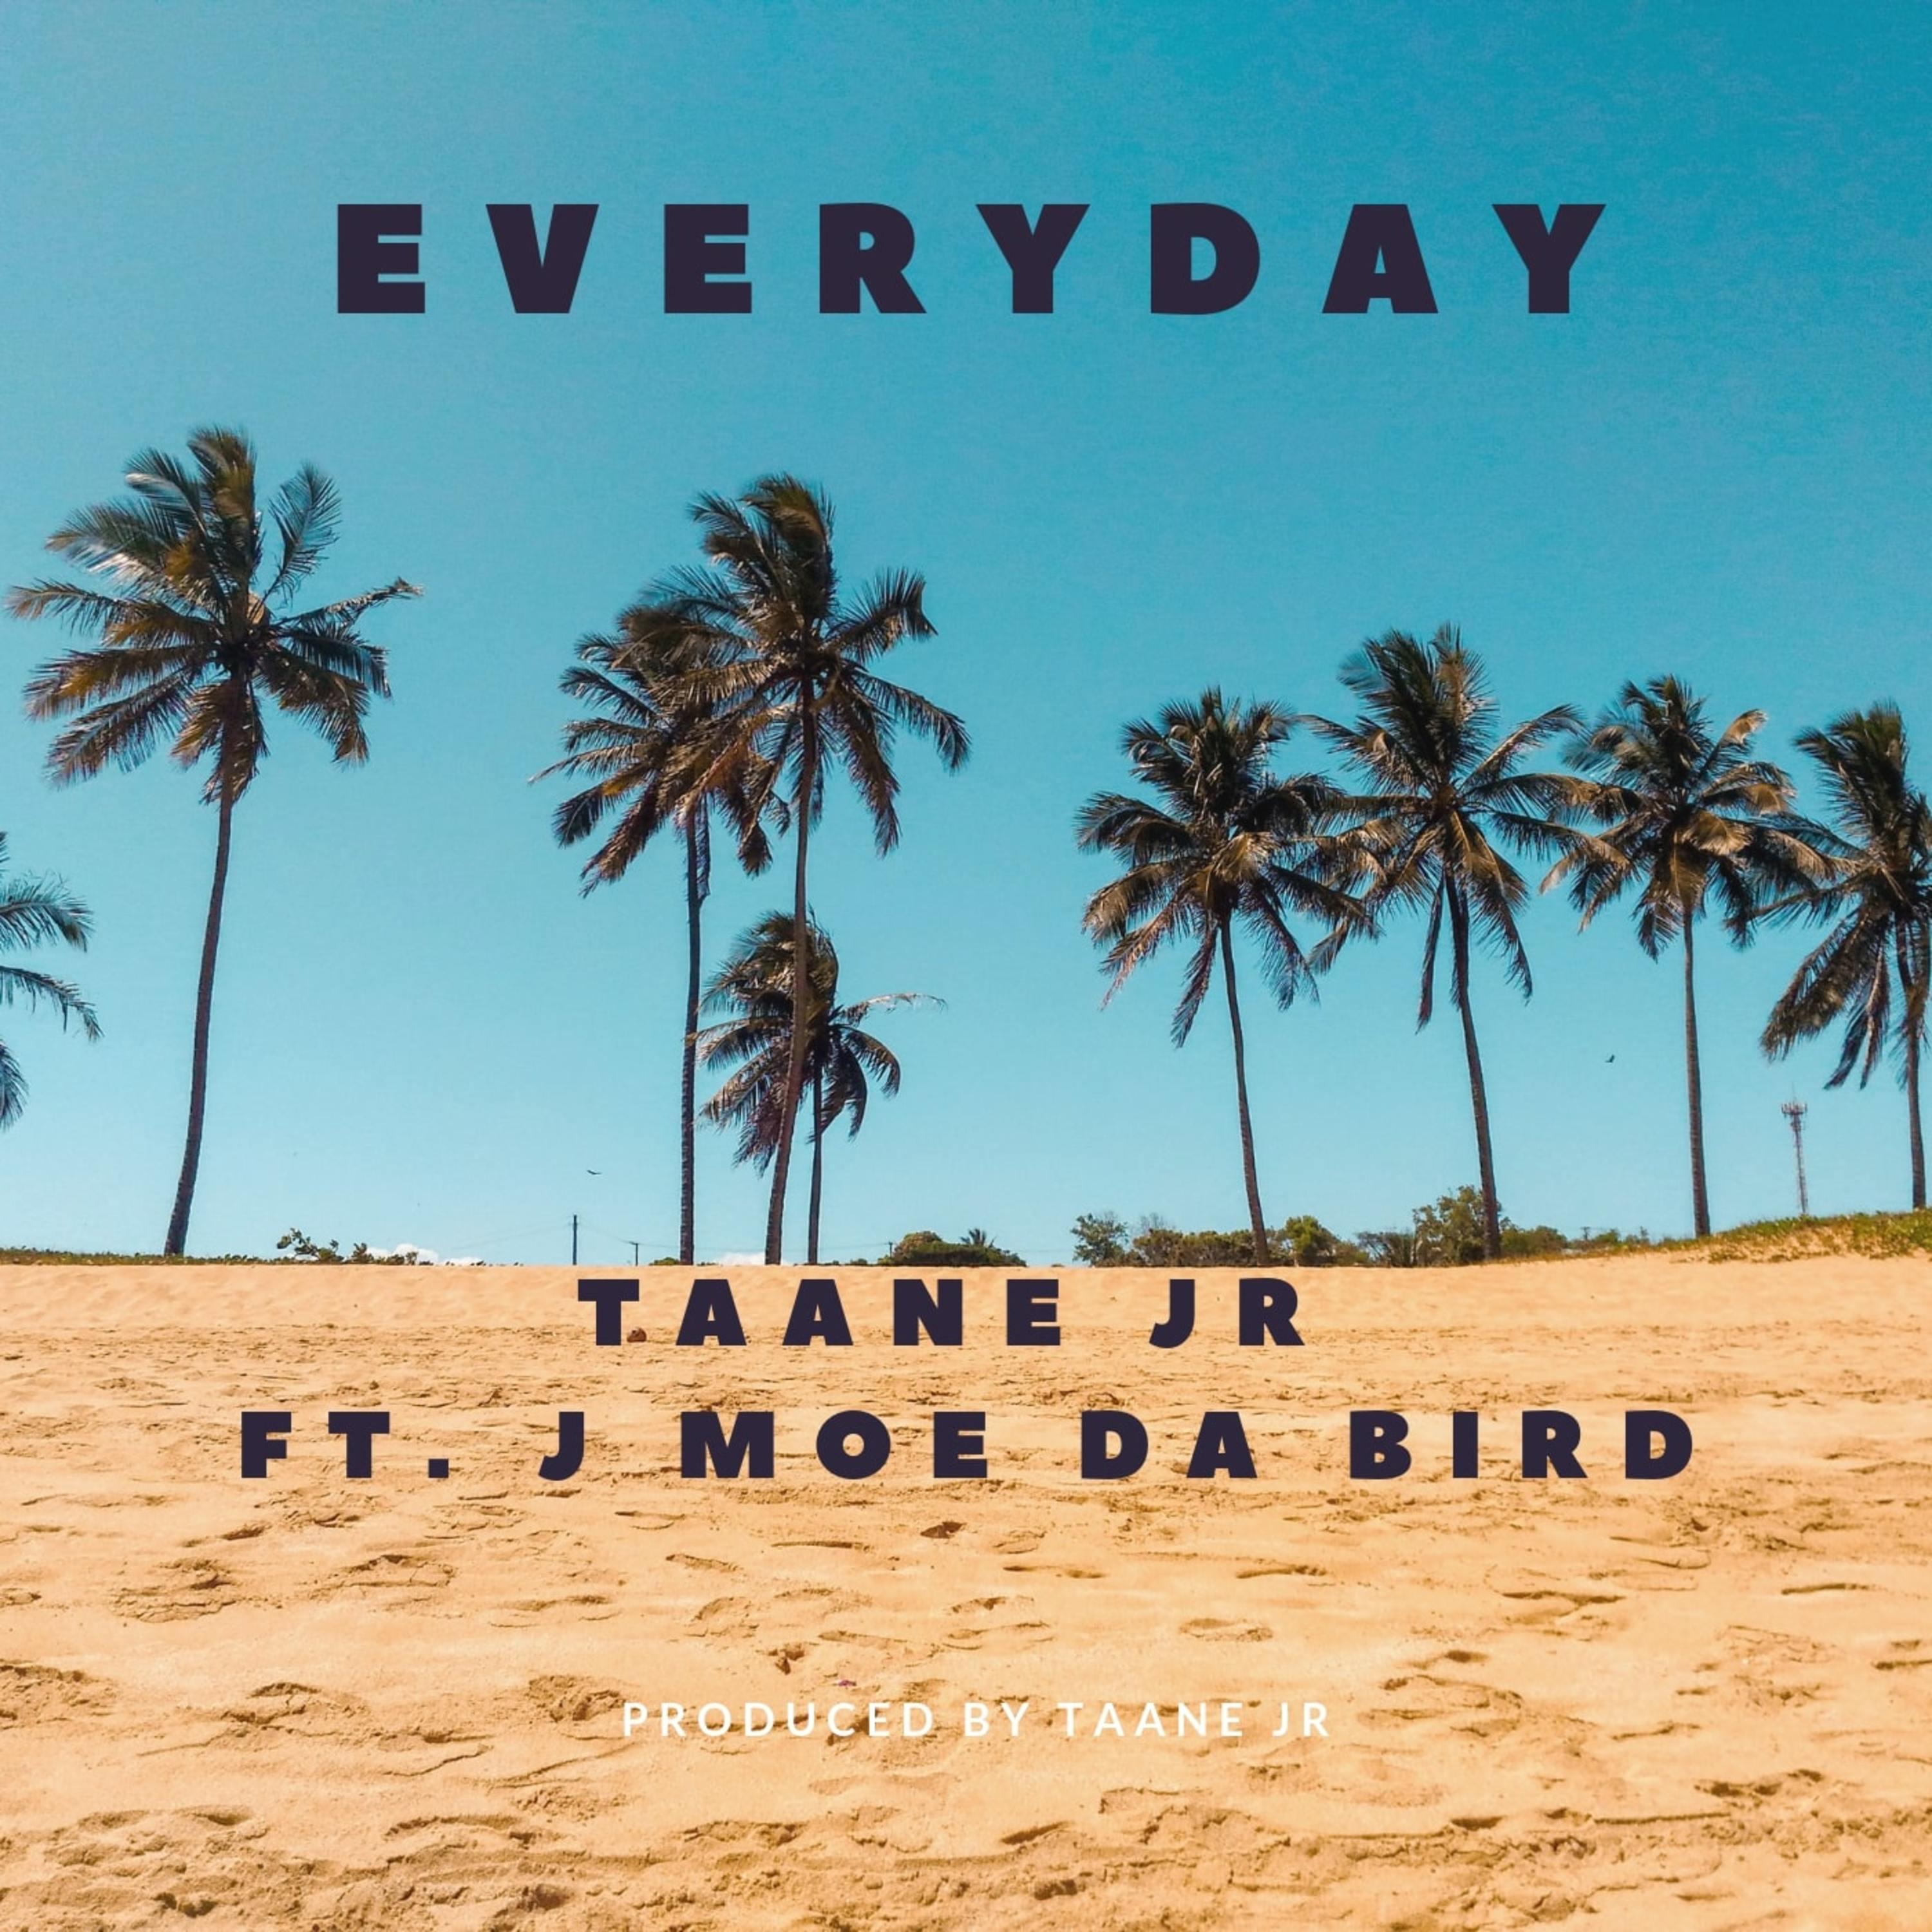 Taane Jr - Everyday (feat. J Moe Da Bird)